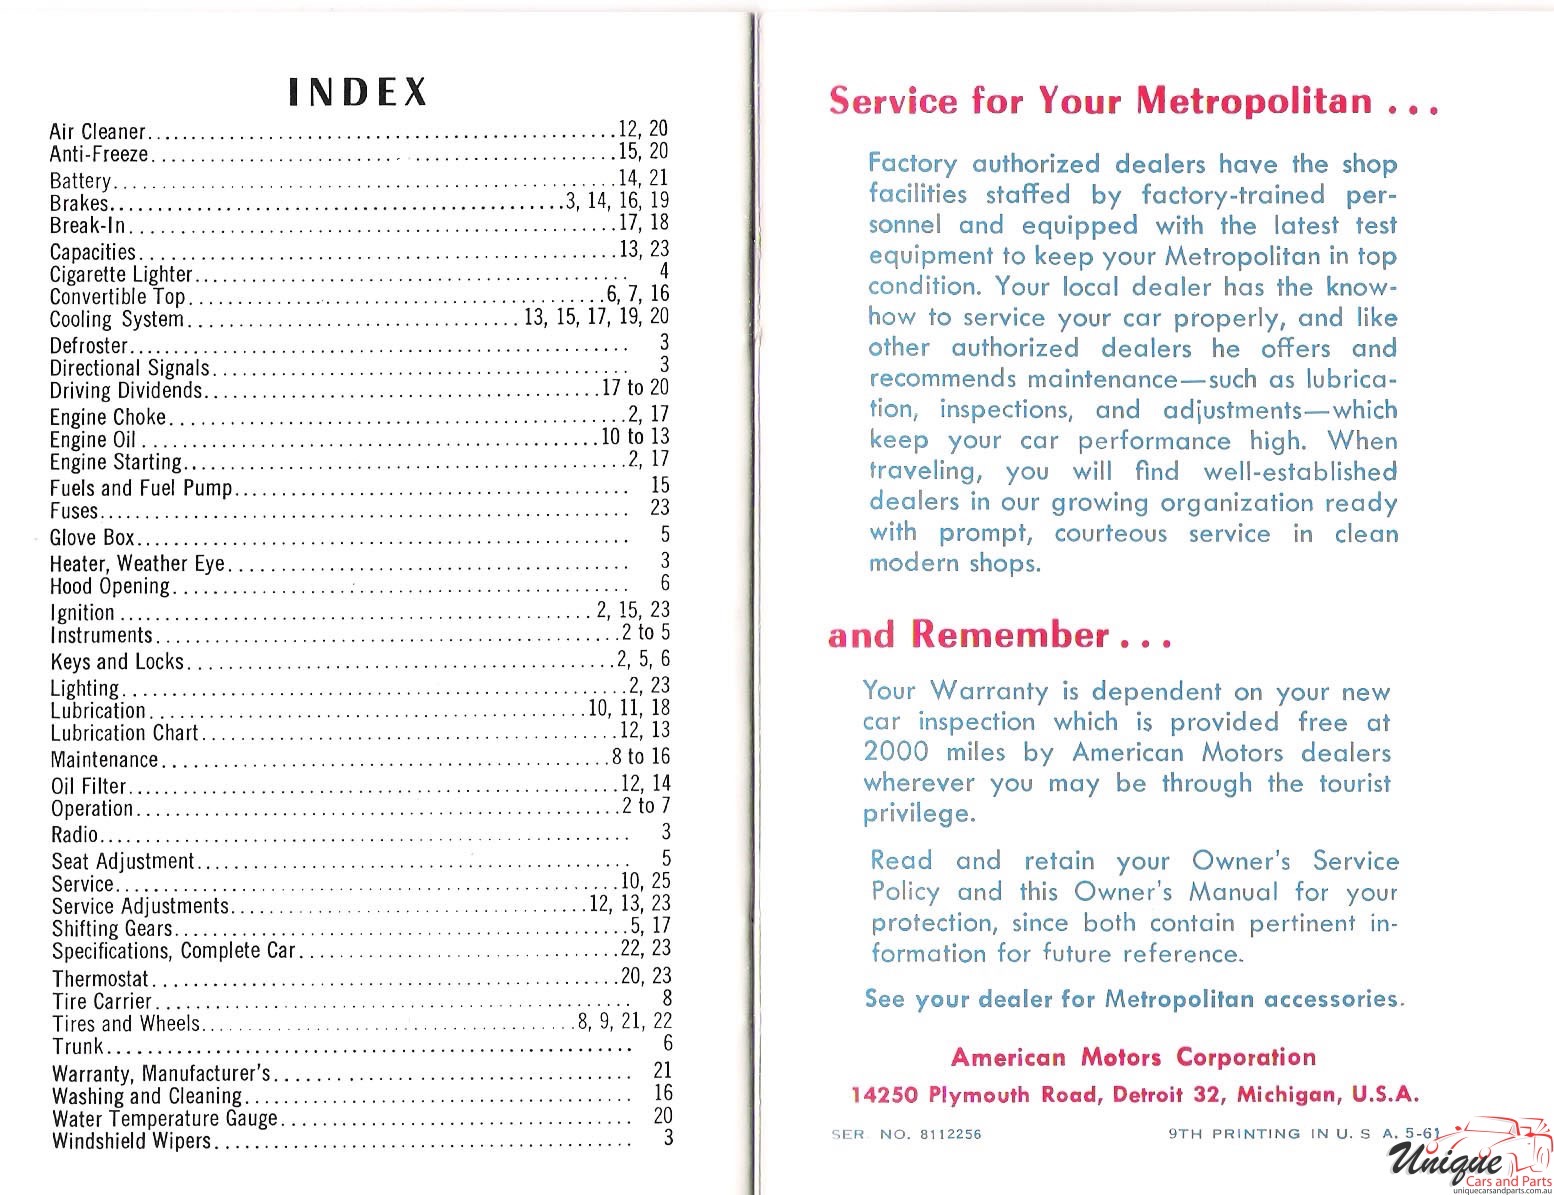 1957 Nash Metropolitan Owners Manual Page 10